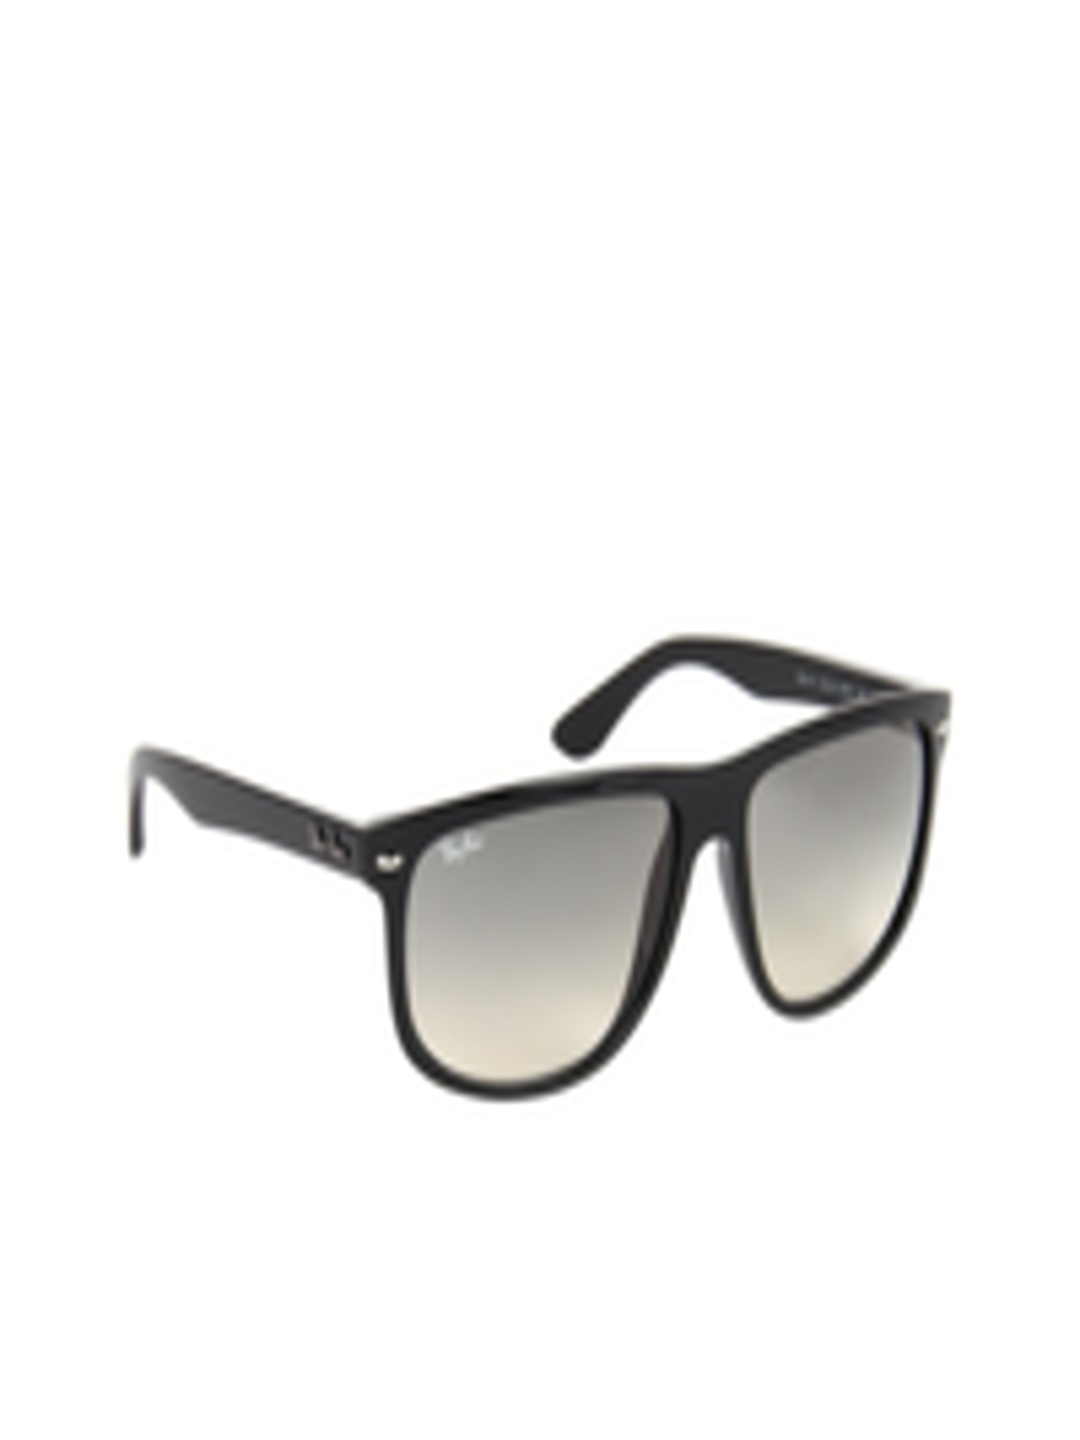 Buy Ray Ban Unisex Sunglasses 0RB4147 - Sunglasses for Unisex 255330